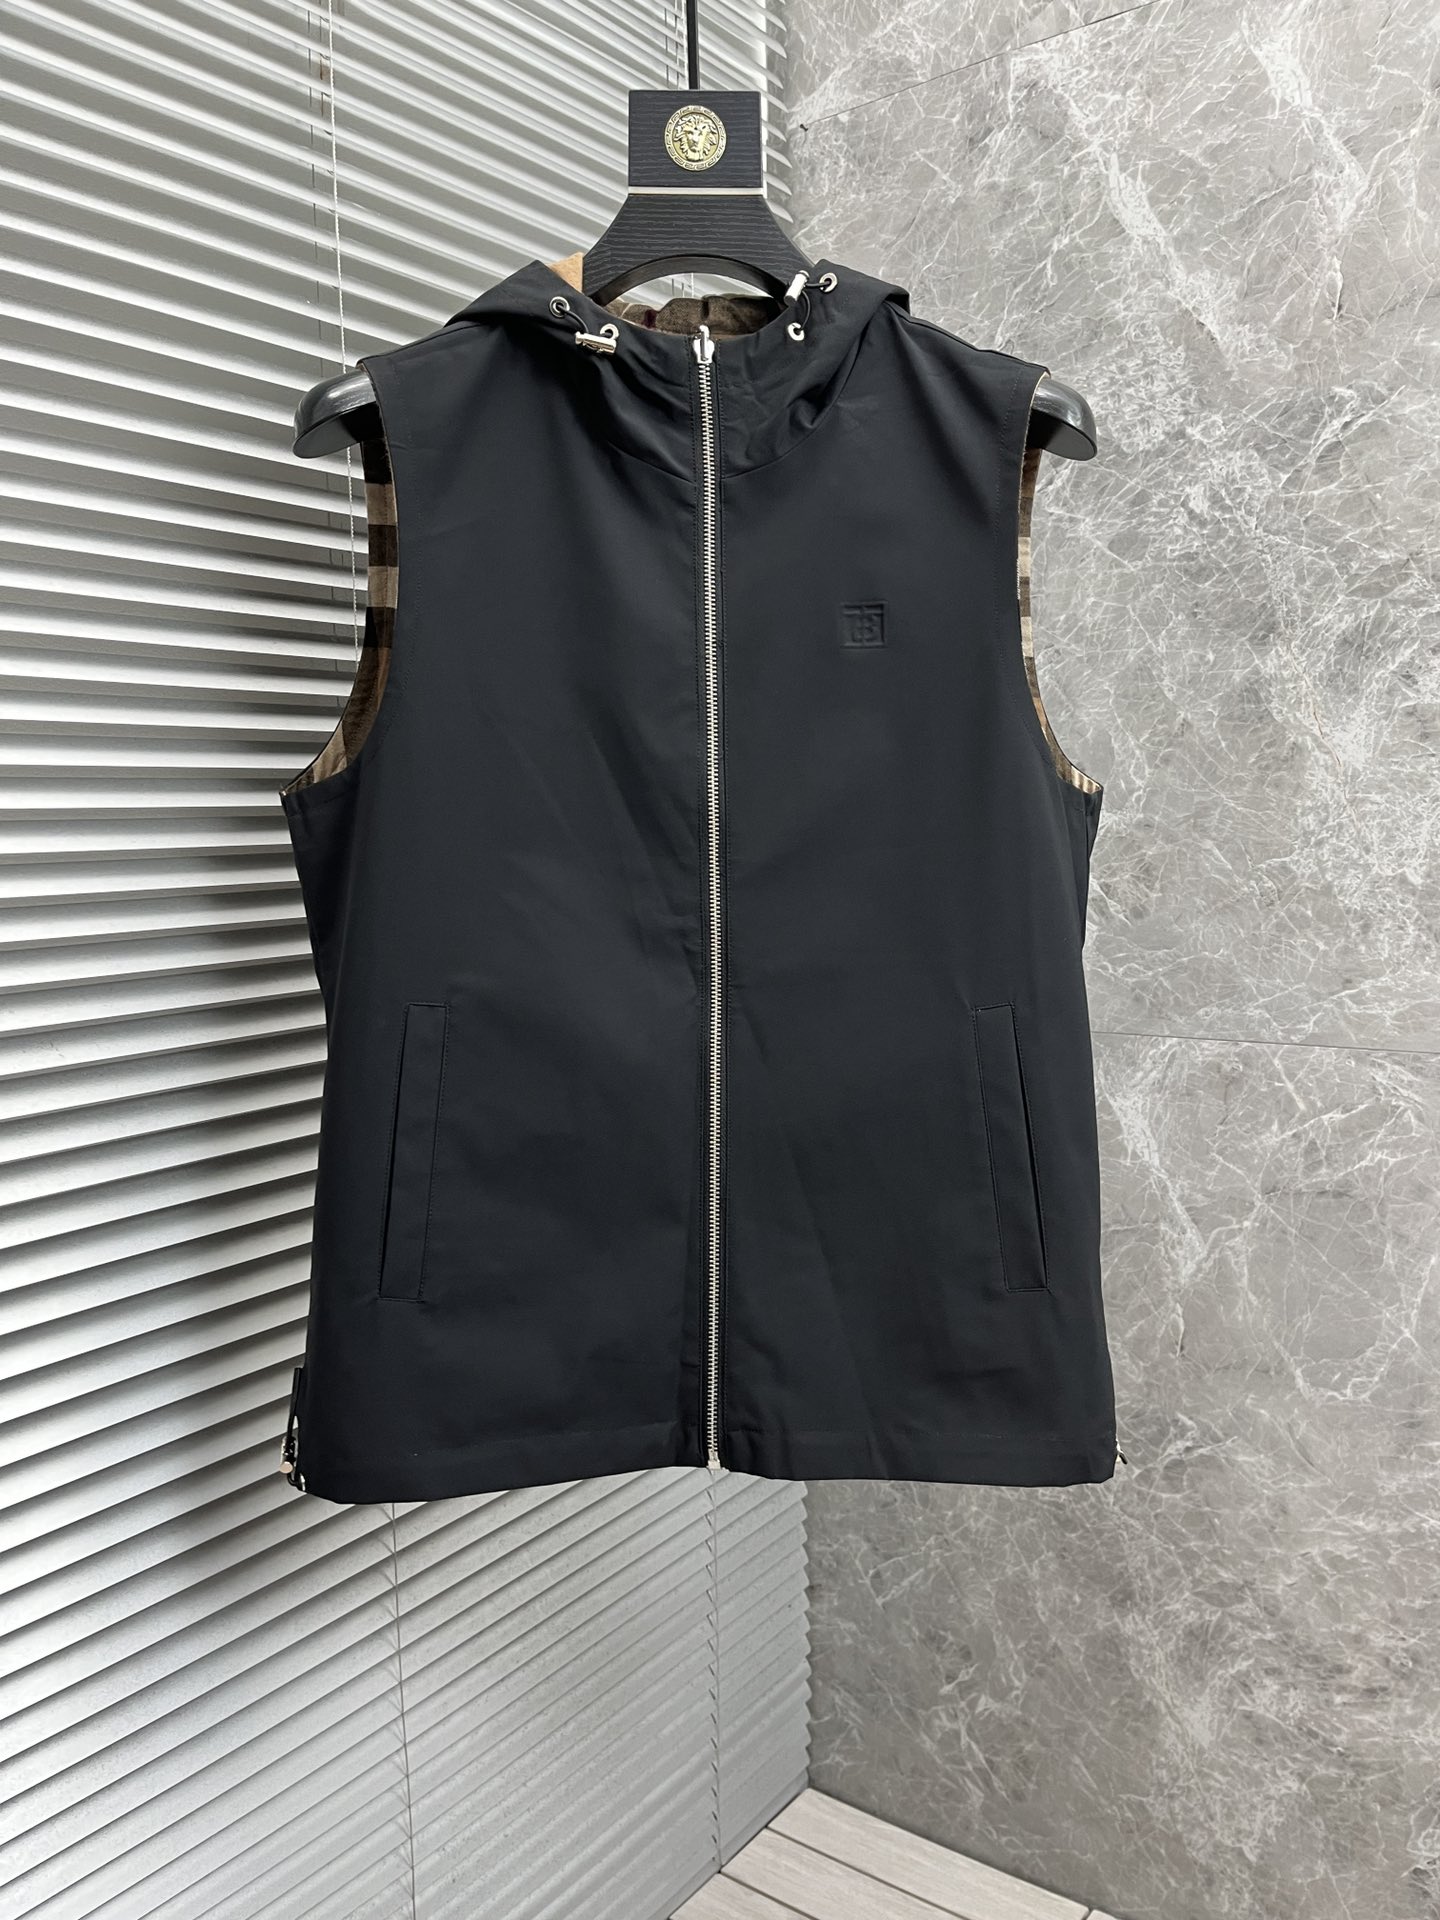 Burberry Clothing Coats & Jackets Waistcoat Lattice Fall/Winter Collection Hooded Top